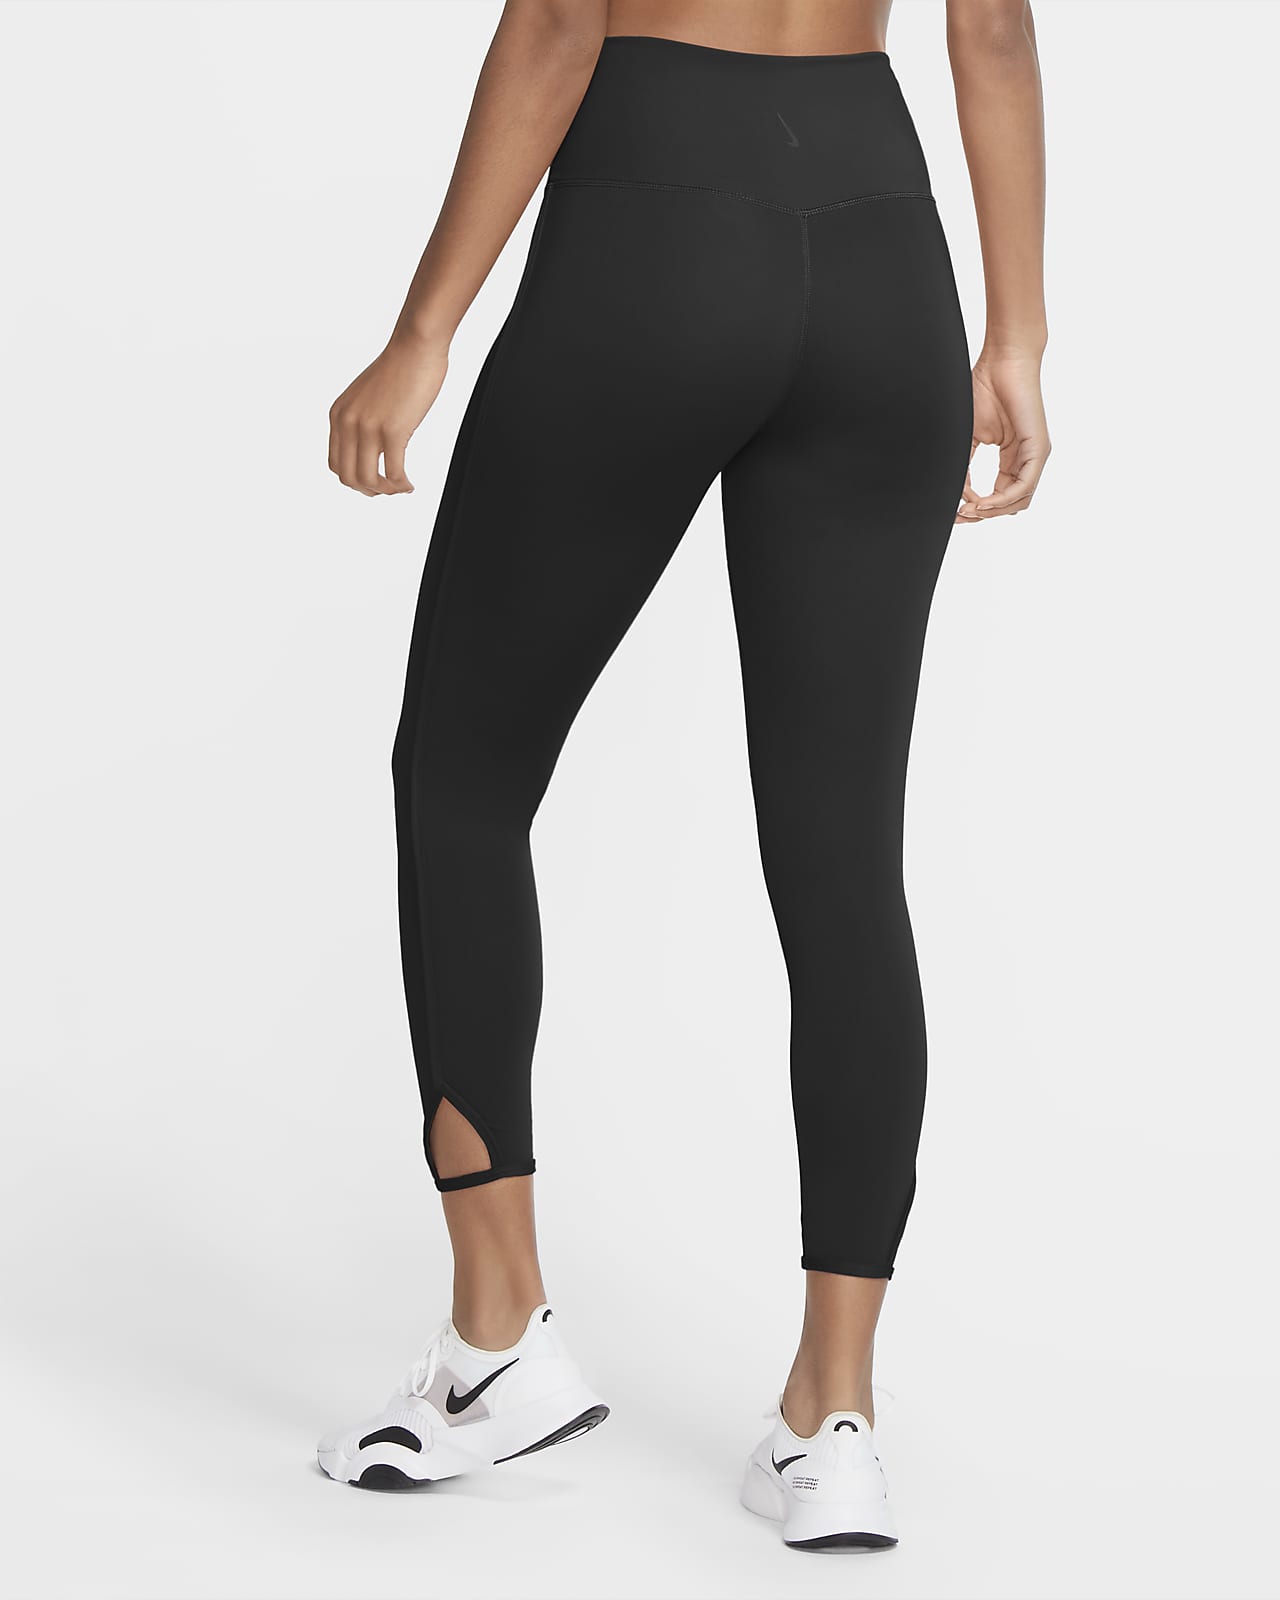 Nike Yoga Women's 7/8 Cutout Tights. Nike.com